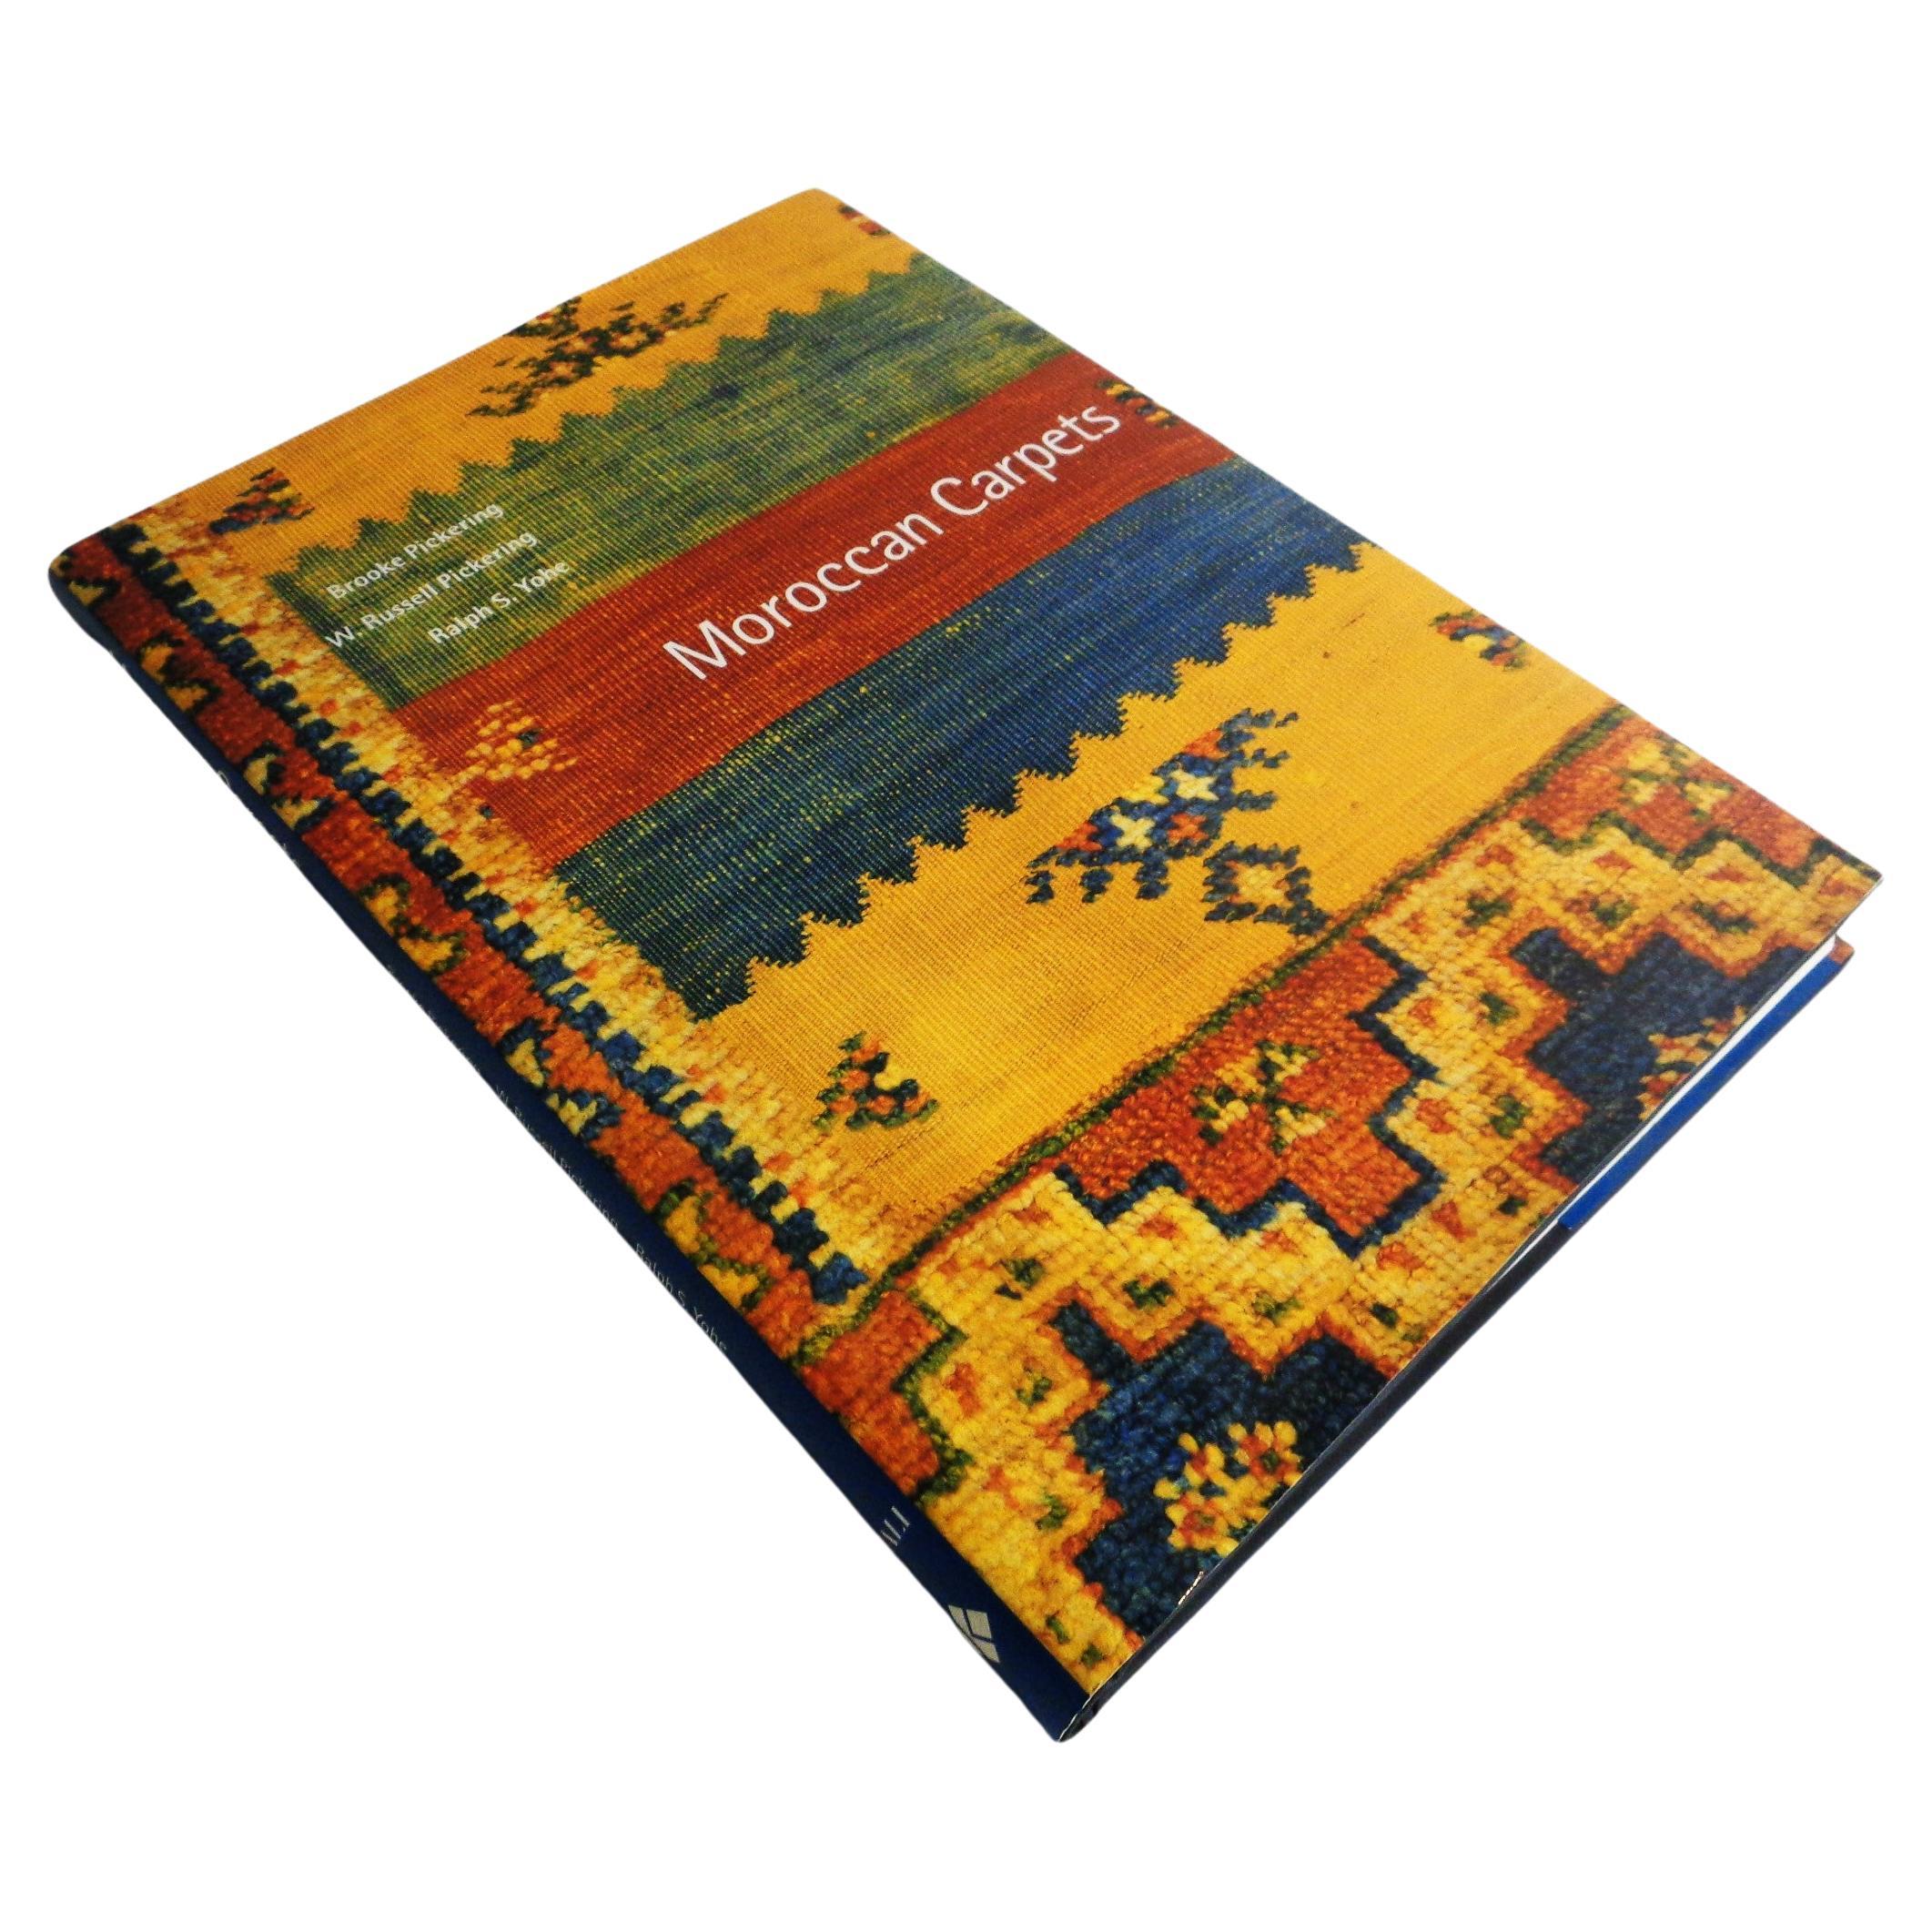  Moroccan Carpets: Pickering, Pickering, Yohe - Laurence King Hali Publications